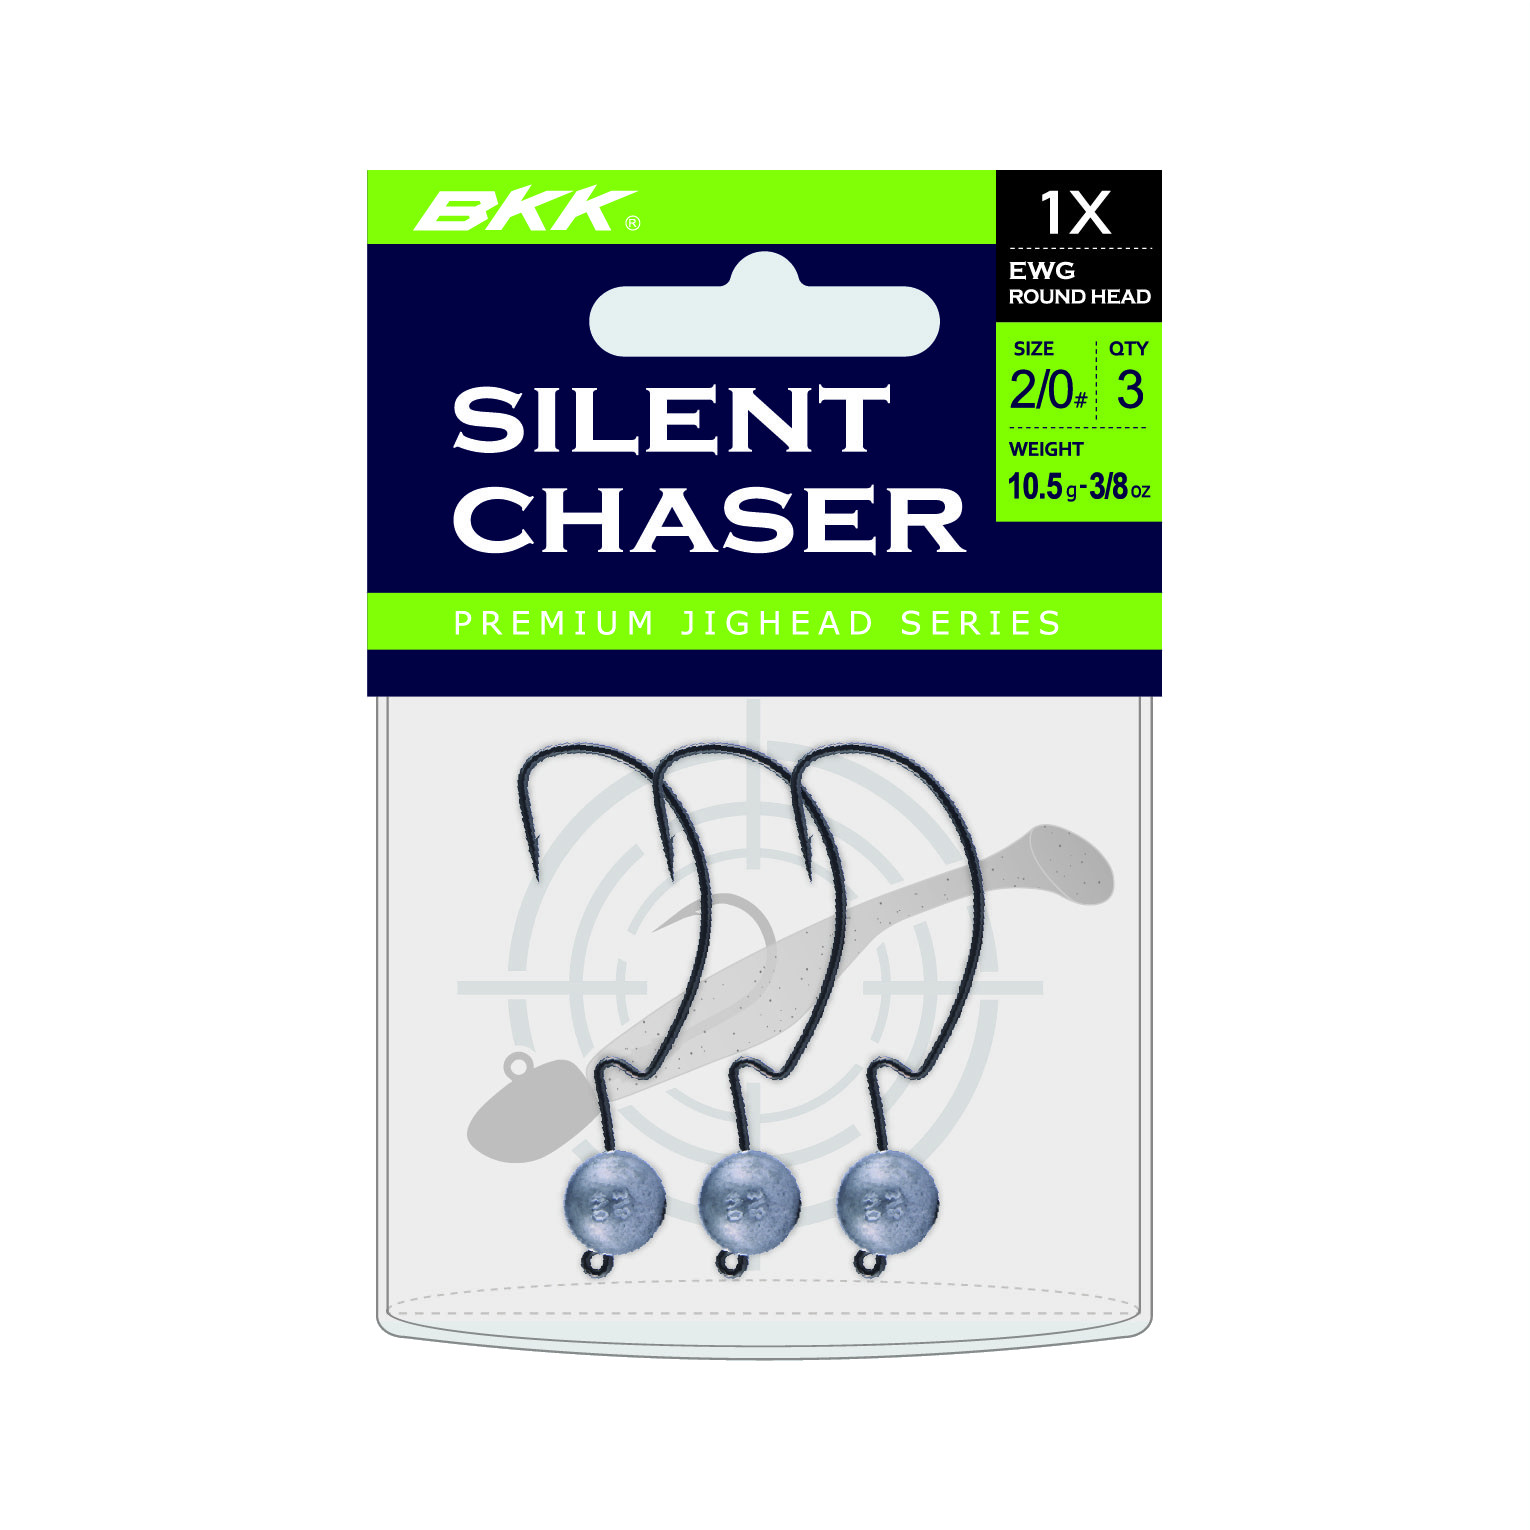 BKK Silent Chaser 1X EWG Round Head Cabeza de Plomo #4/0